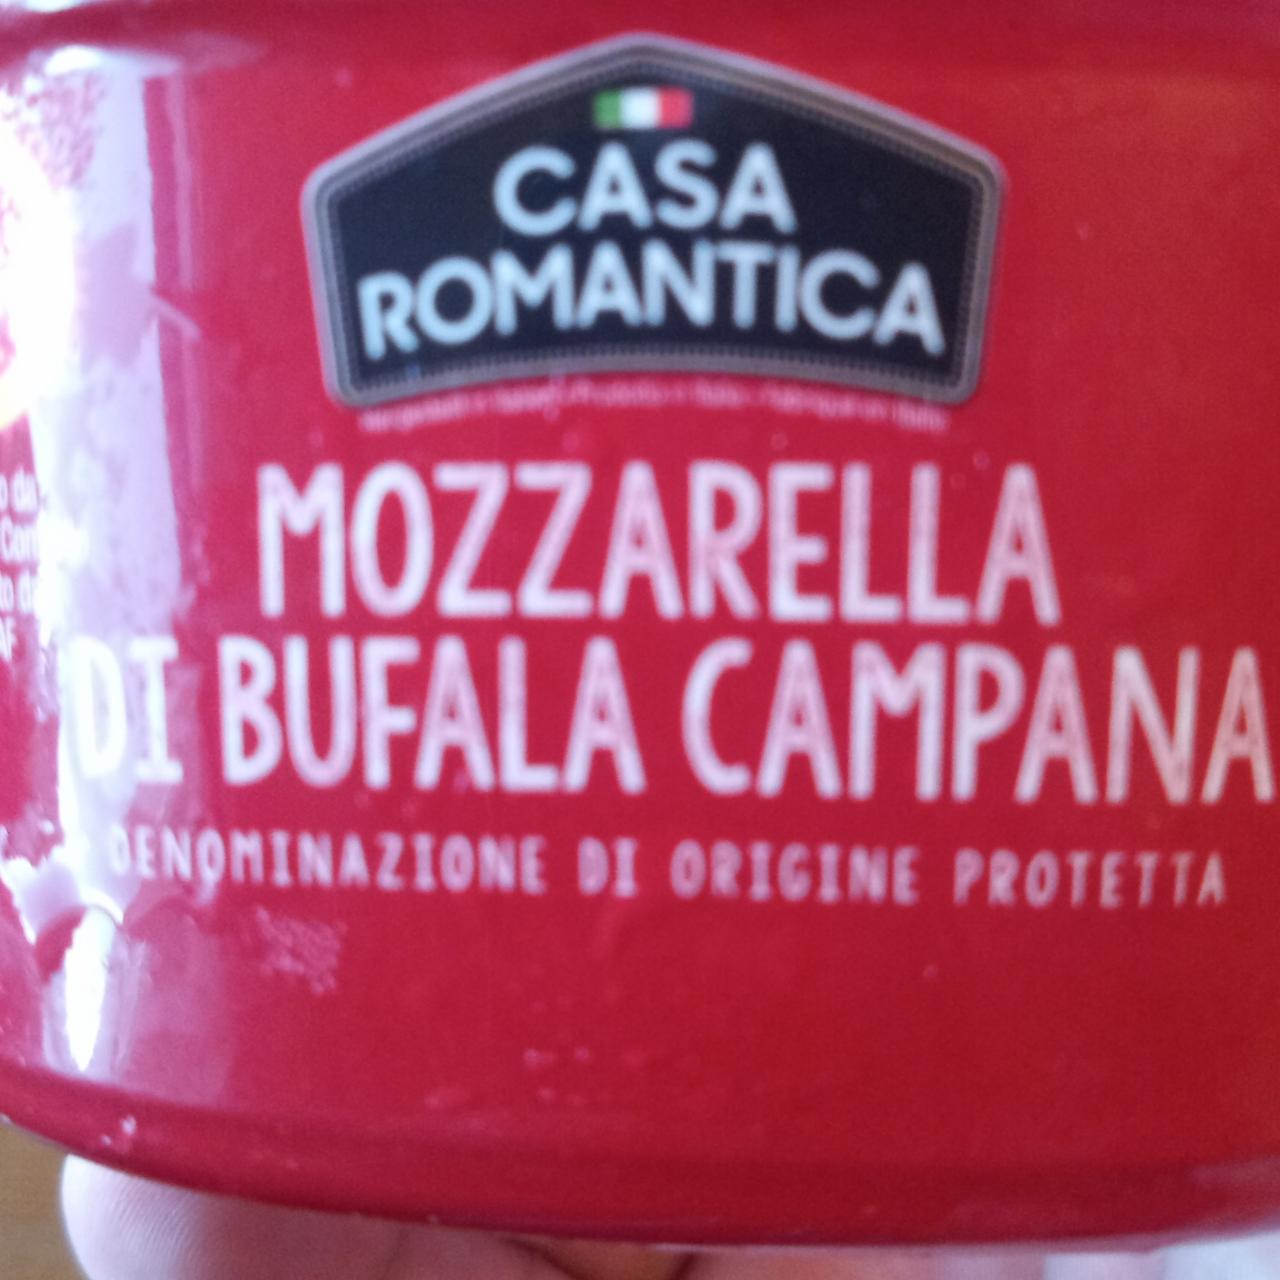 Zdjęcia - Mozzarella di bufala campana Casa romantica